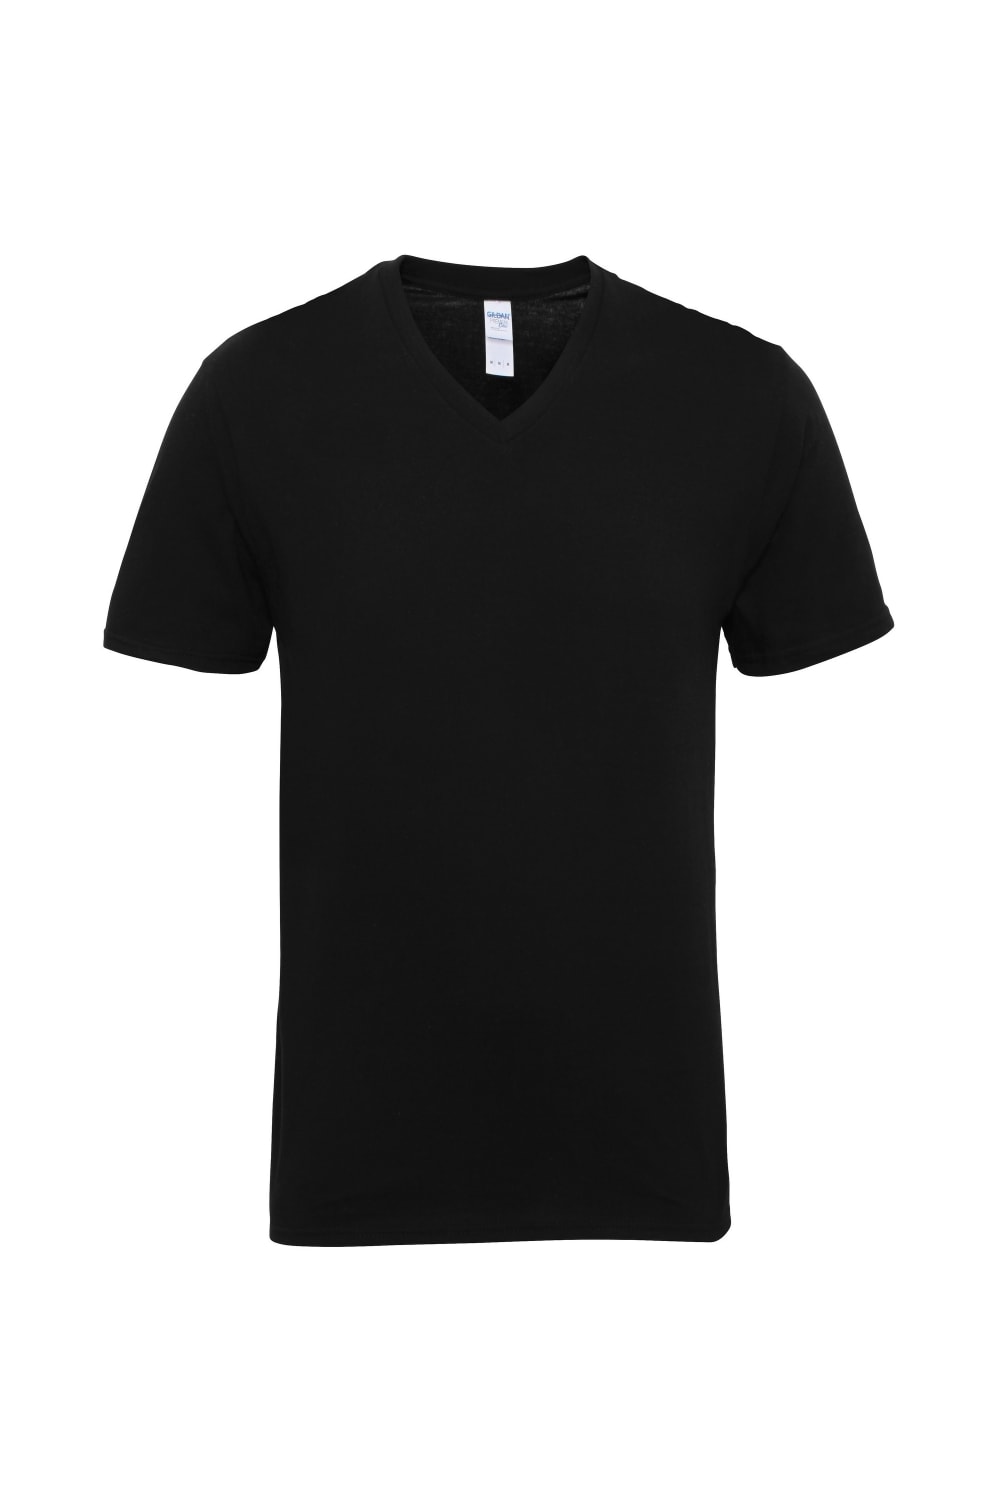 Gildan Adults Unisex Short Sleeve Premium Cotton V-Neck T-Shirt (Black)